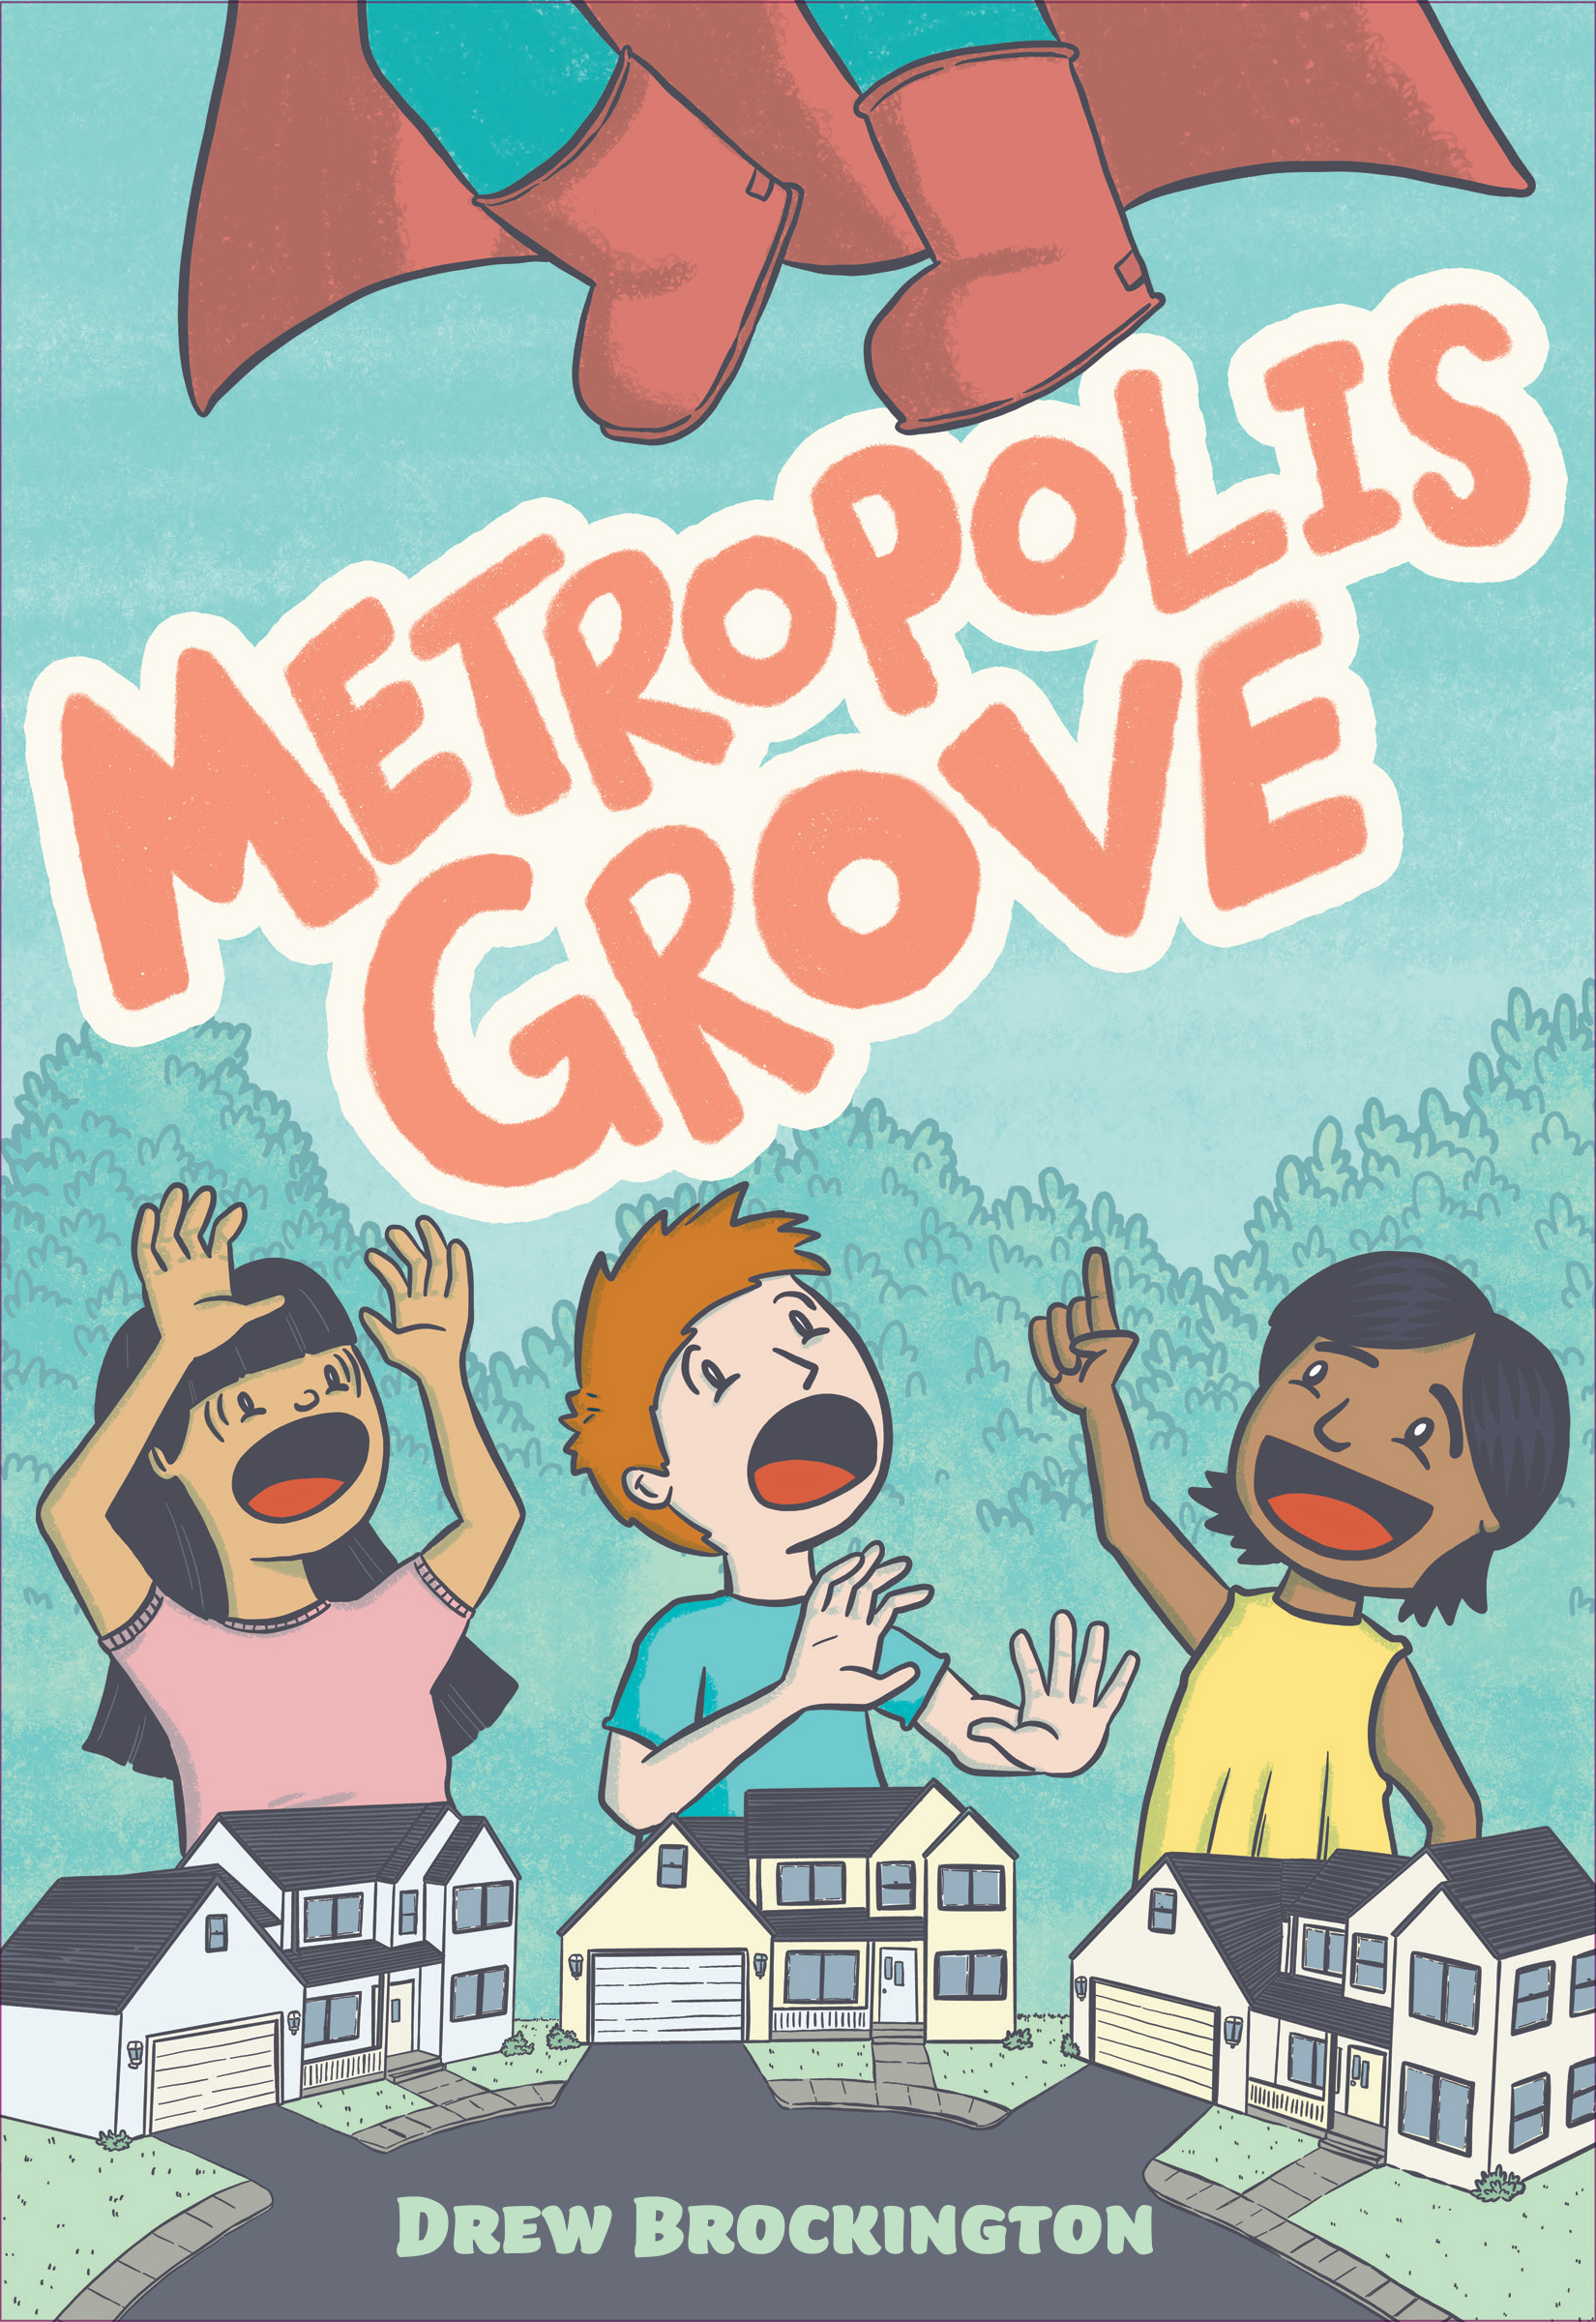 Metropolis Grove Graphic Novel